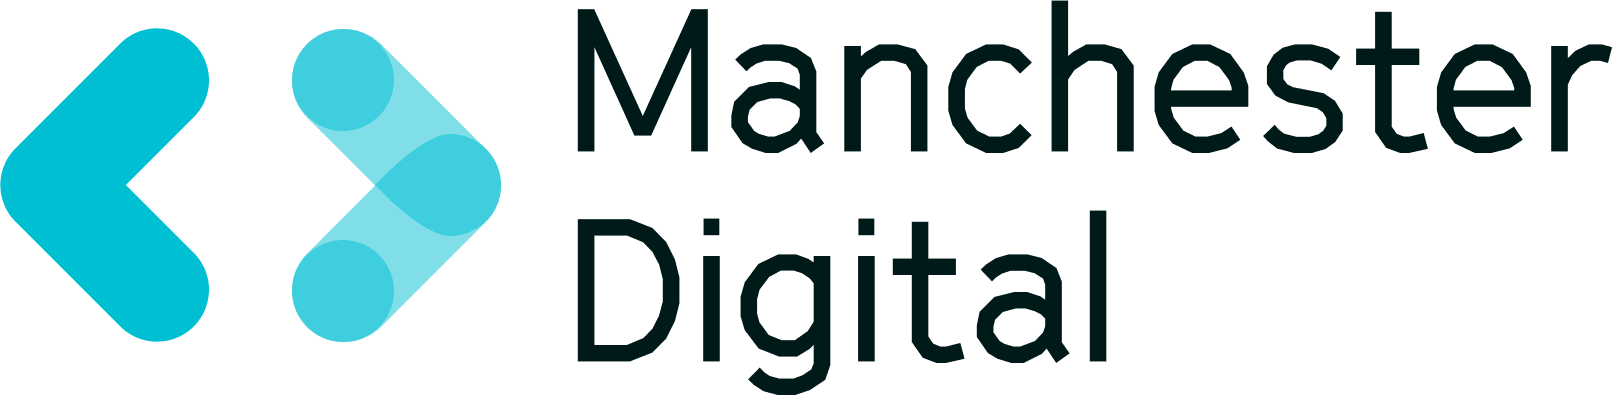 Manchester digital logo